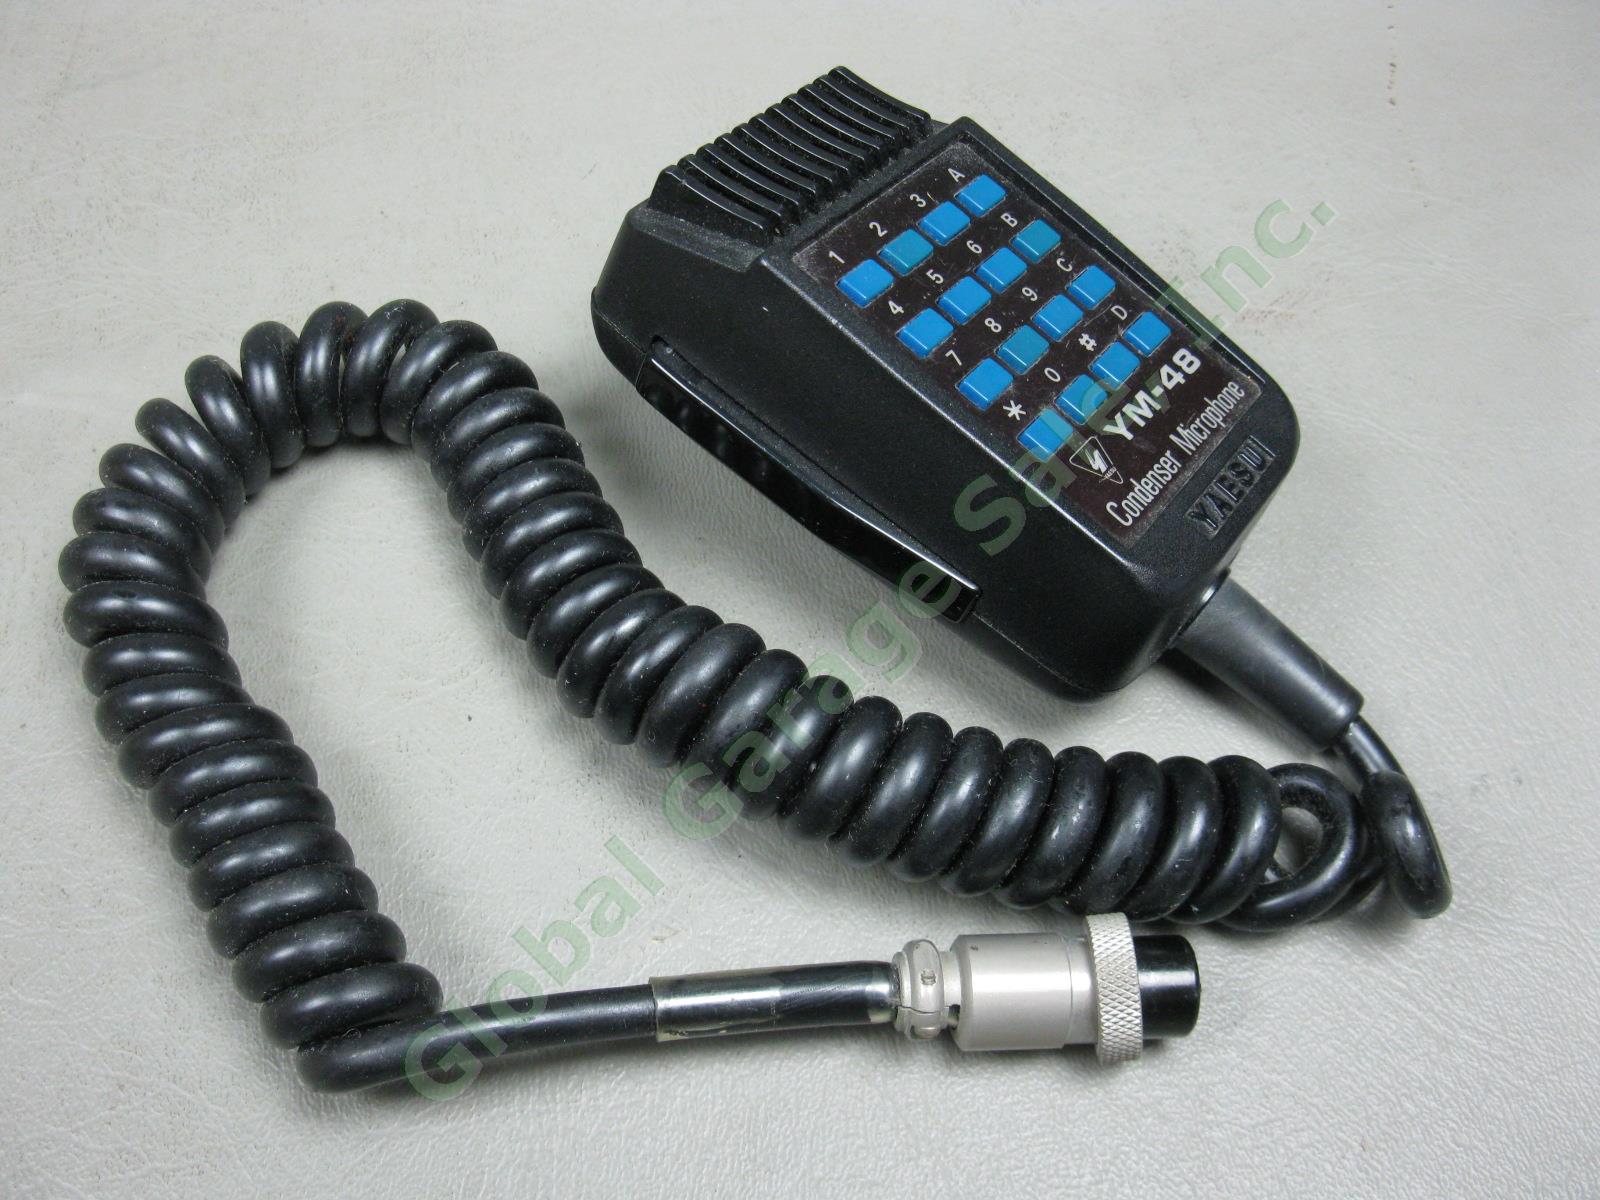 Yaesu FT-726R V/UHF All Mode Tribander Ham Radio Transceiver + YM-48 Mic Tested+ 9